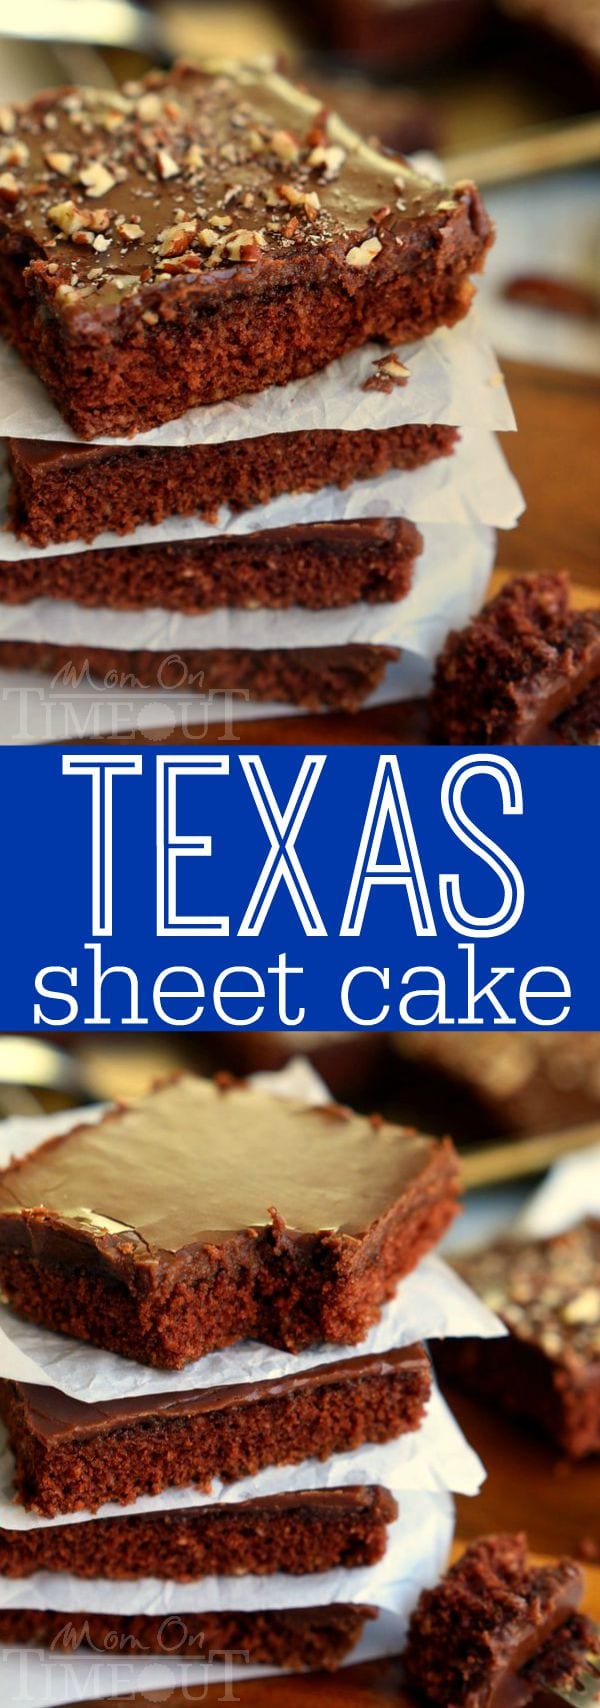 https://www.momontimeout.com/wp-content/uploads/2015/08/texas-sheet-cake-recipe-collage.jpg